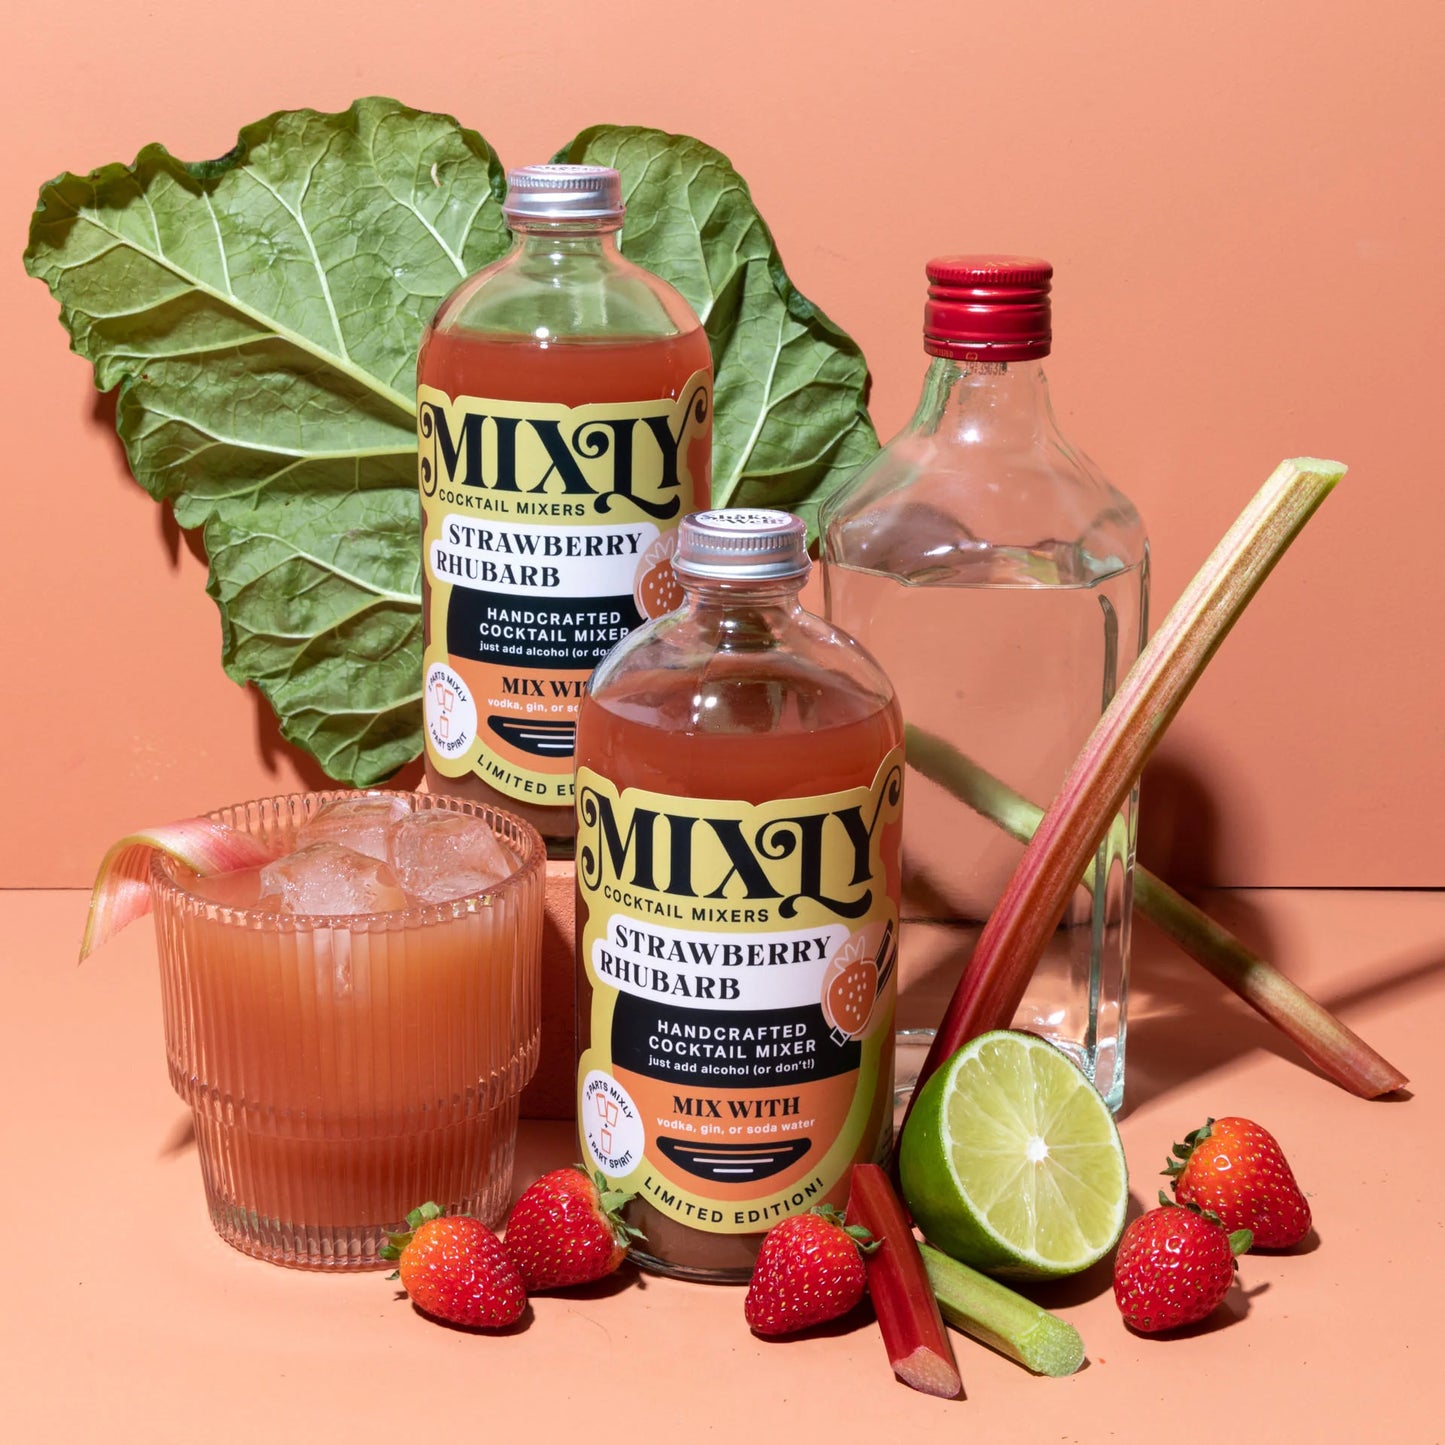 Mixly Cocktail Mixers